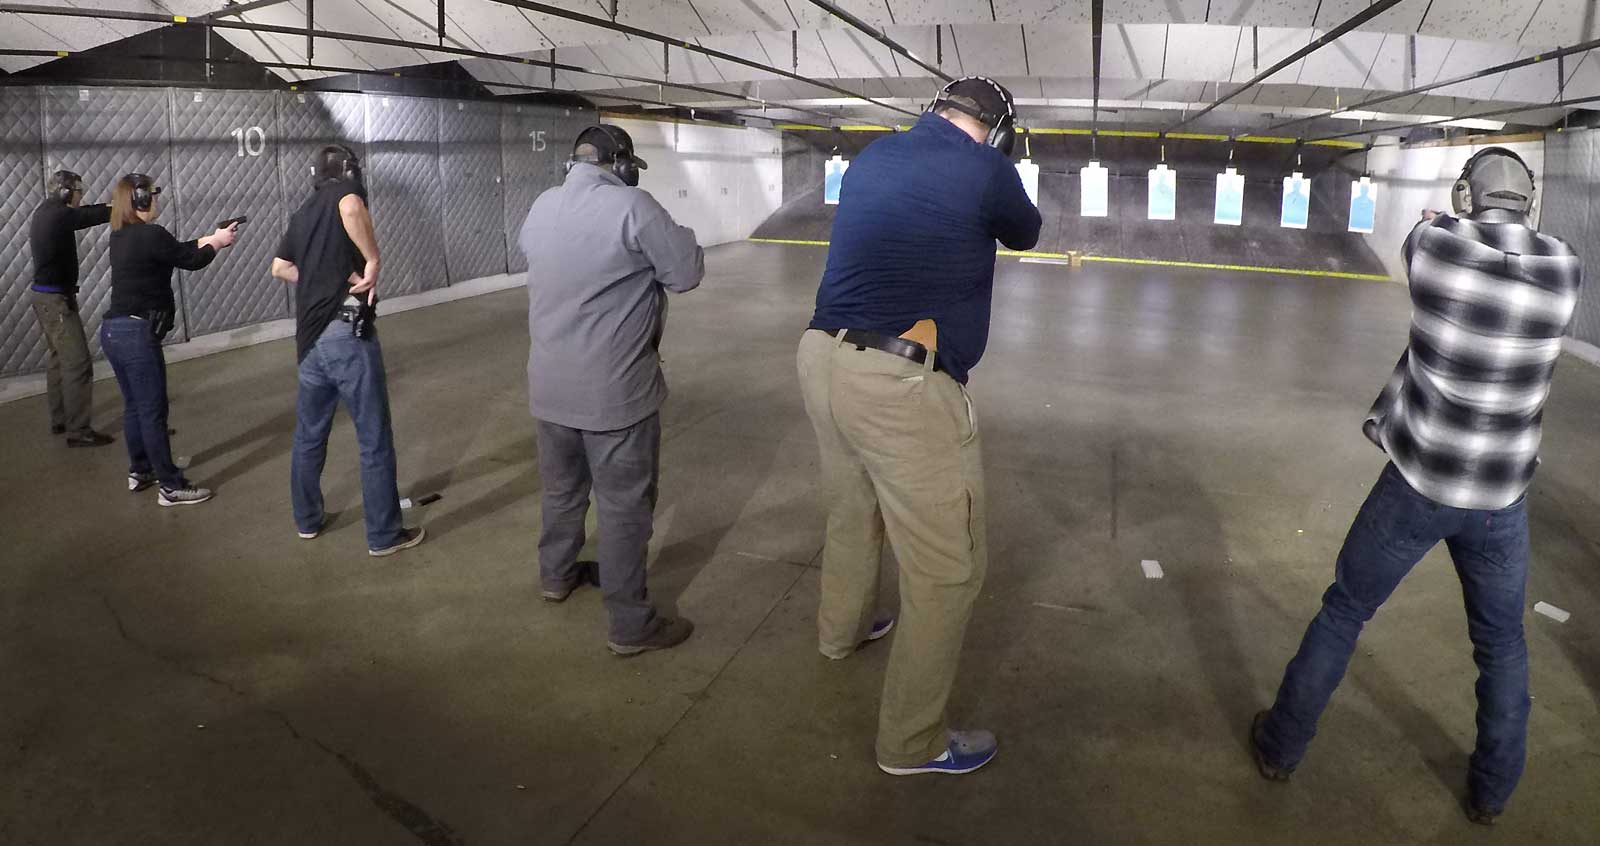 Instructing law enforcement professionals on the gun range